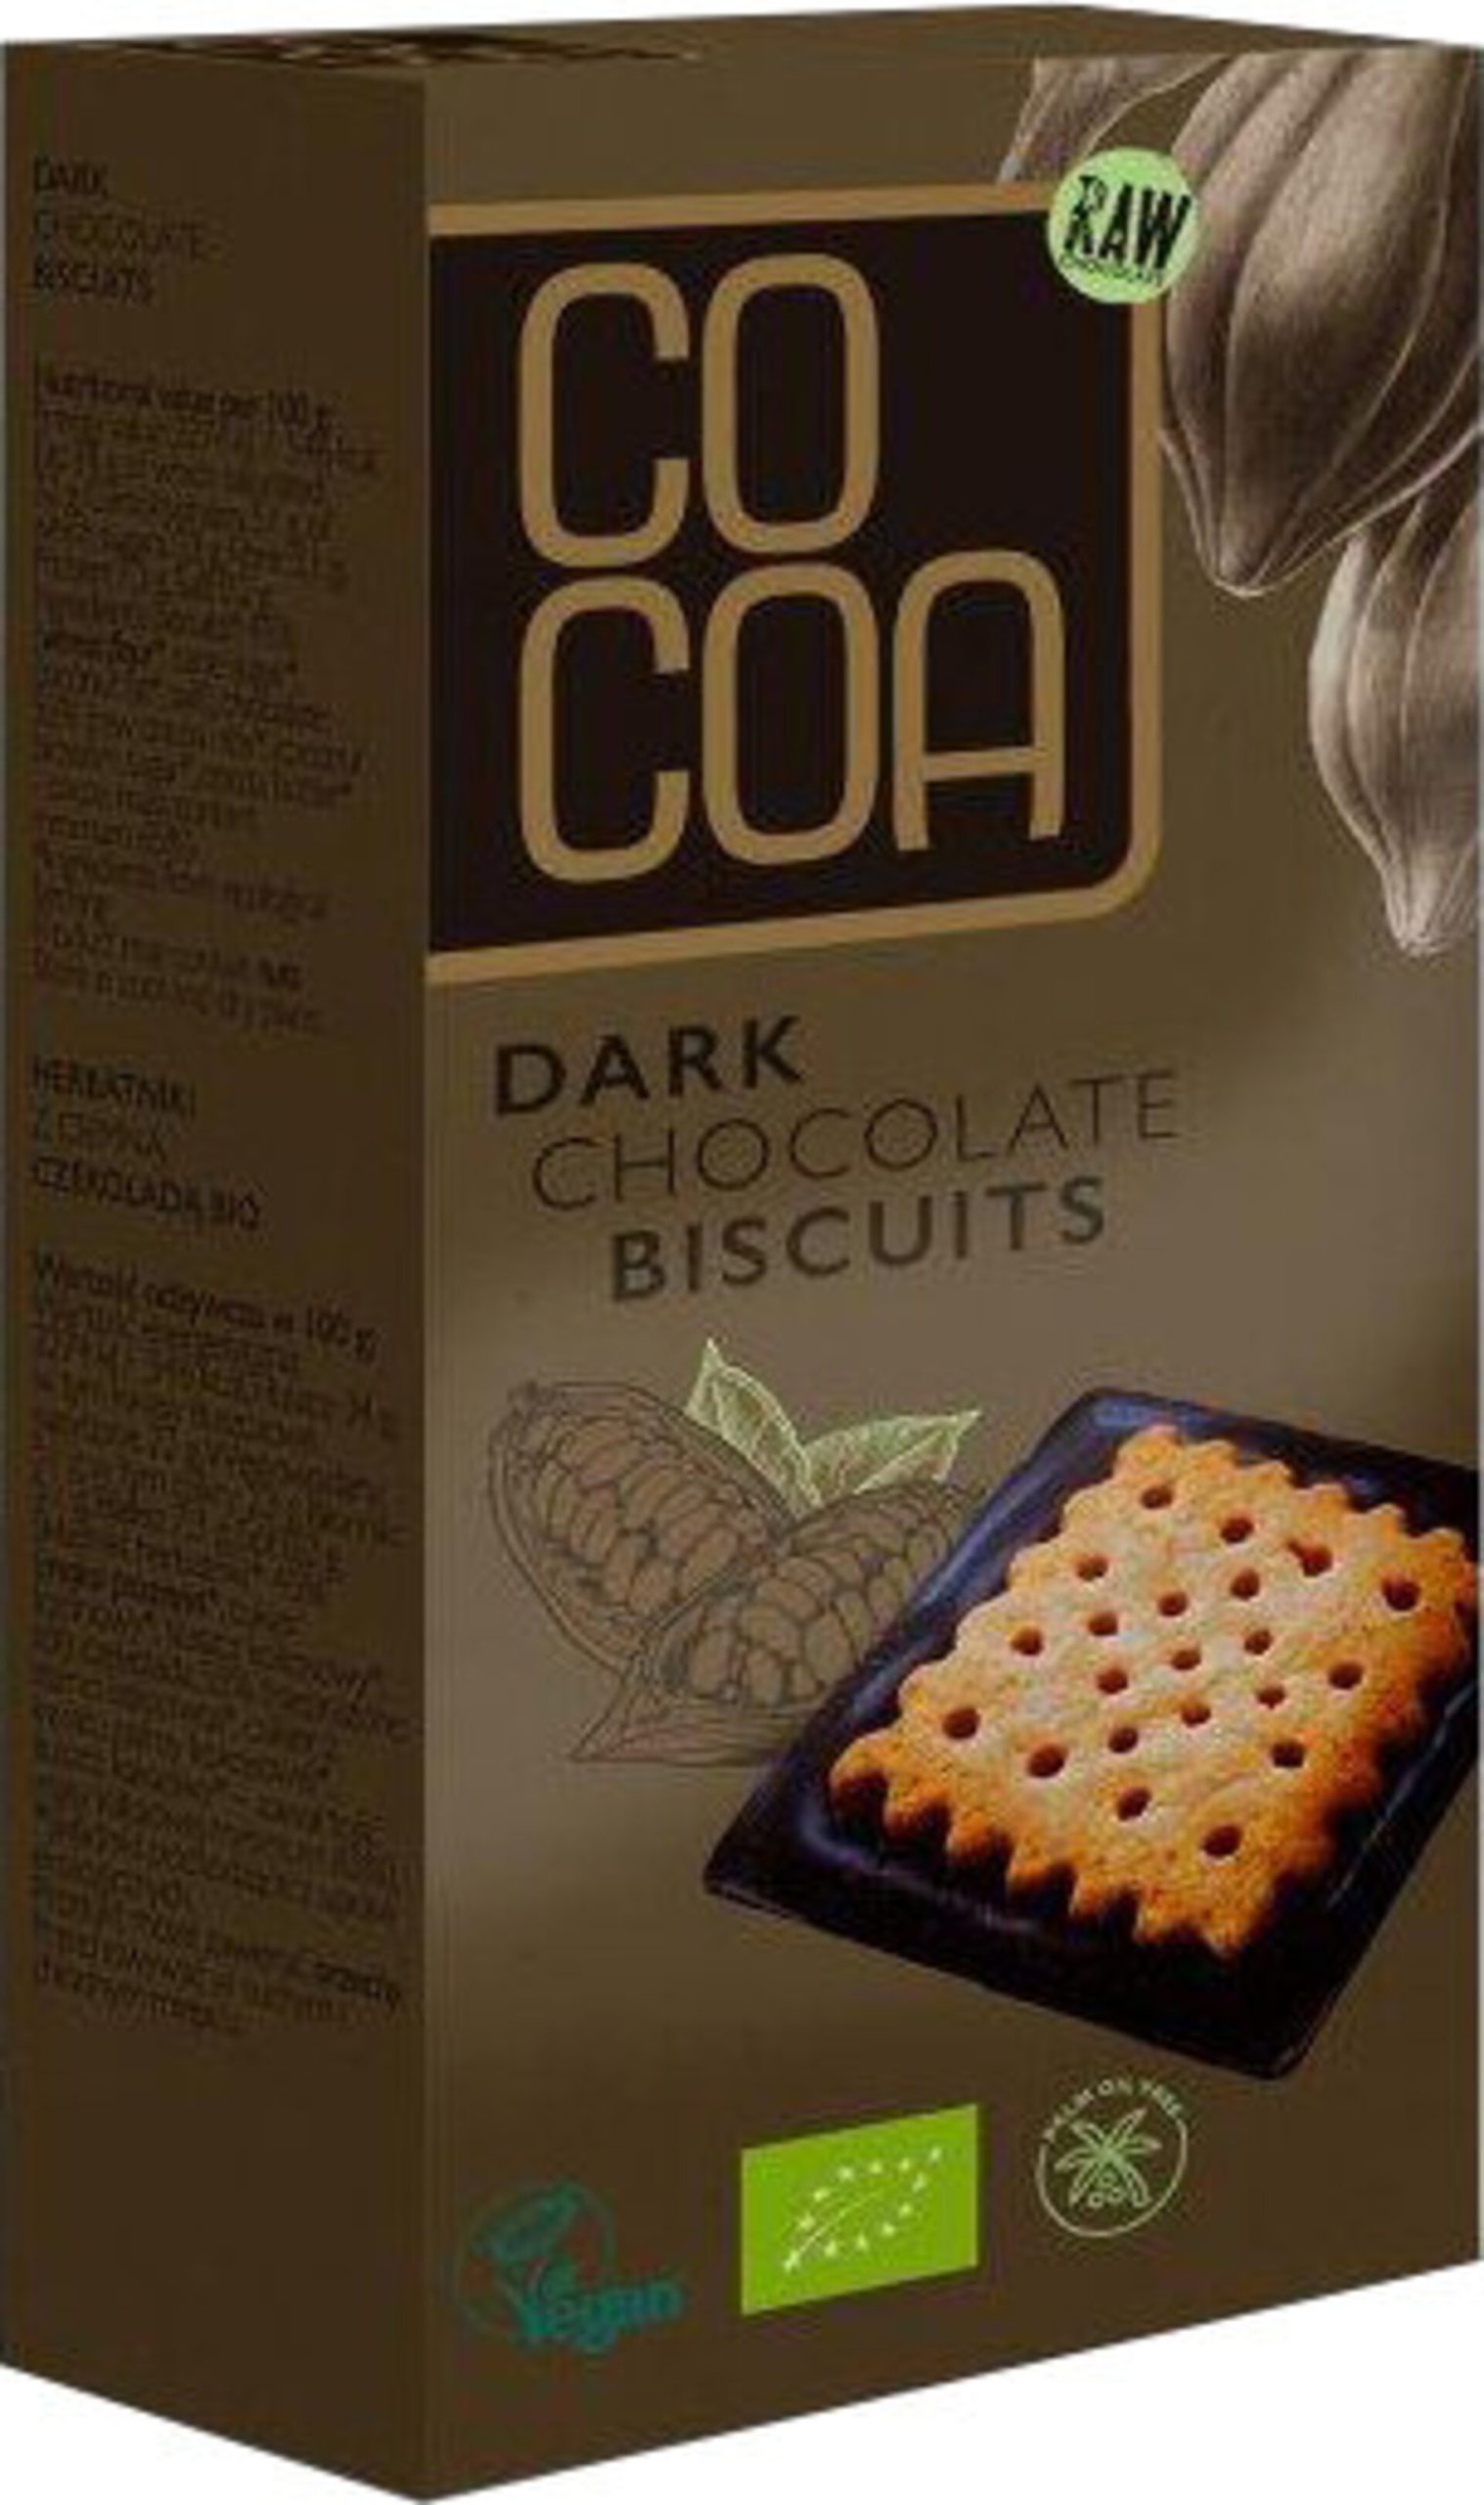 Cocoa Sušenky v hořké čokoládě BIO 95 g